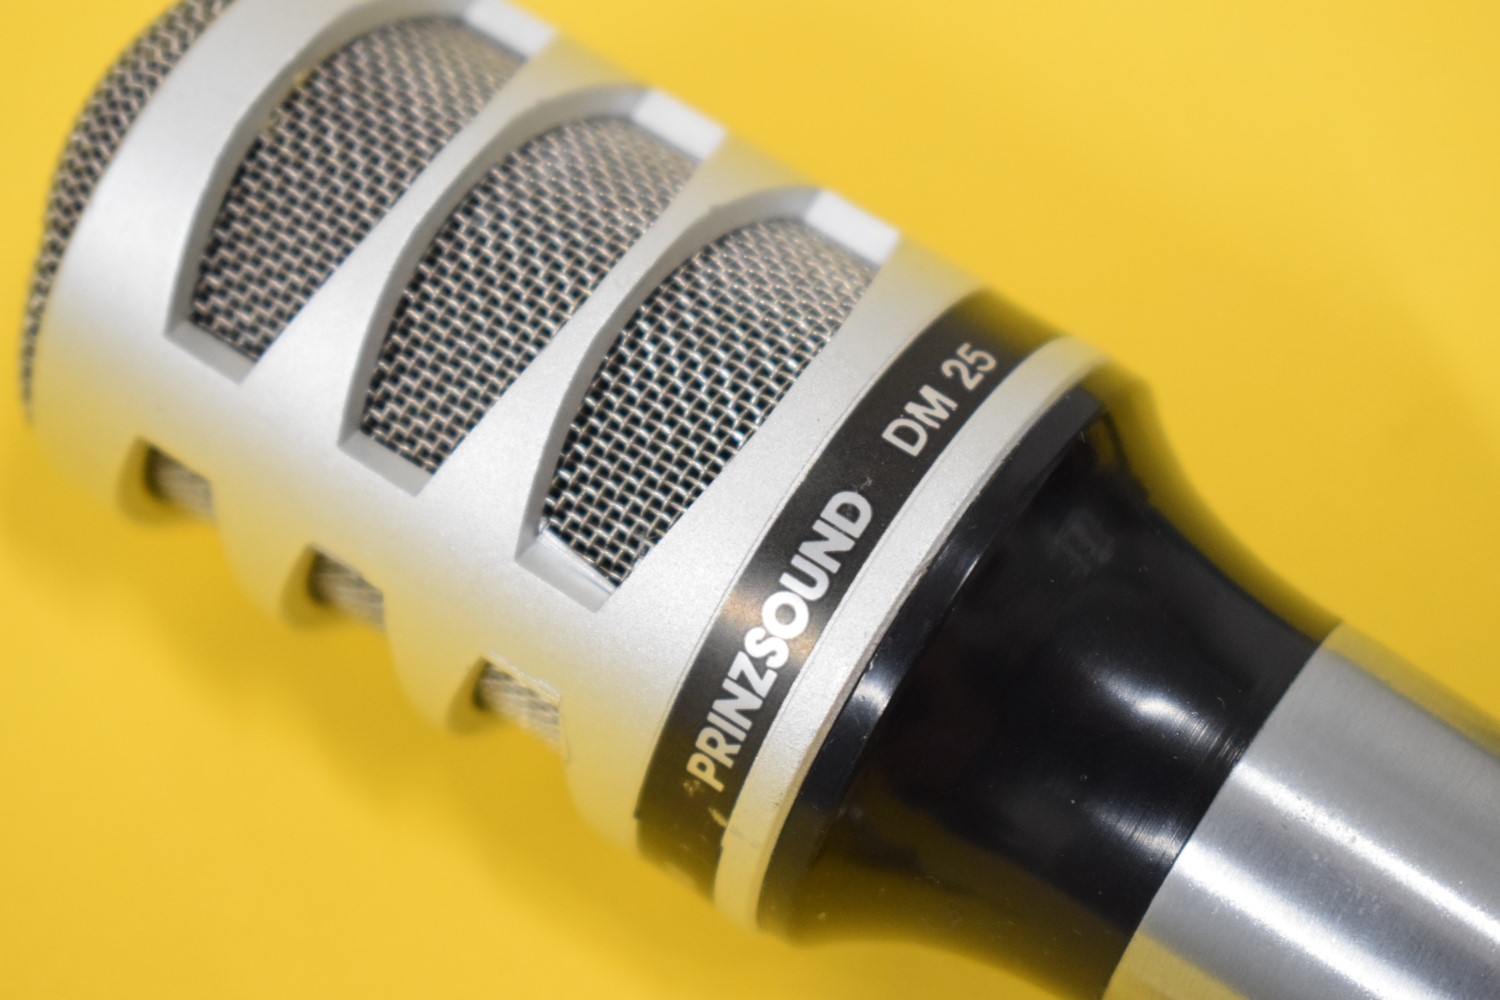 Prinzsound DM 25 Mikrofon – In Originale Verpackung